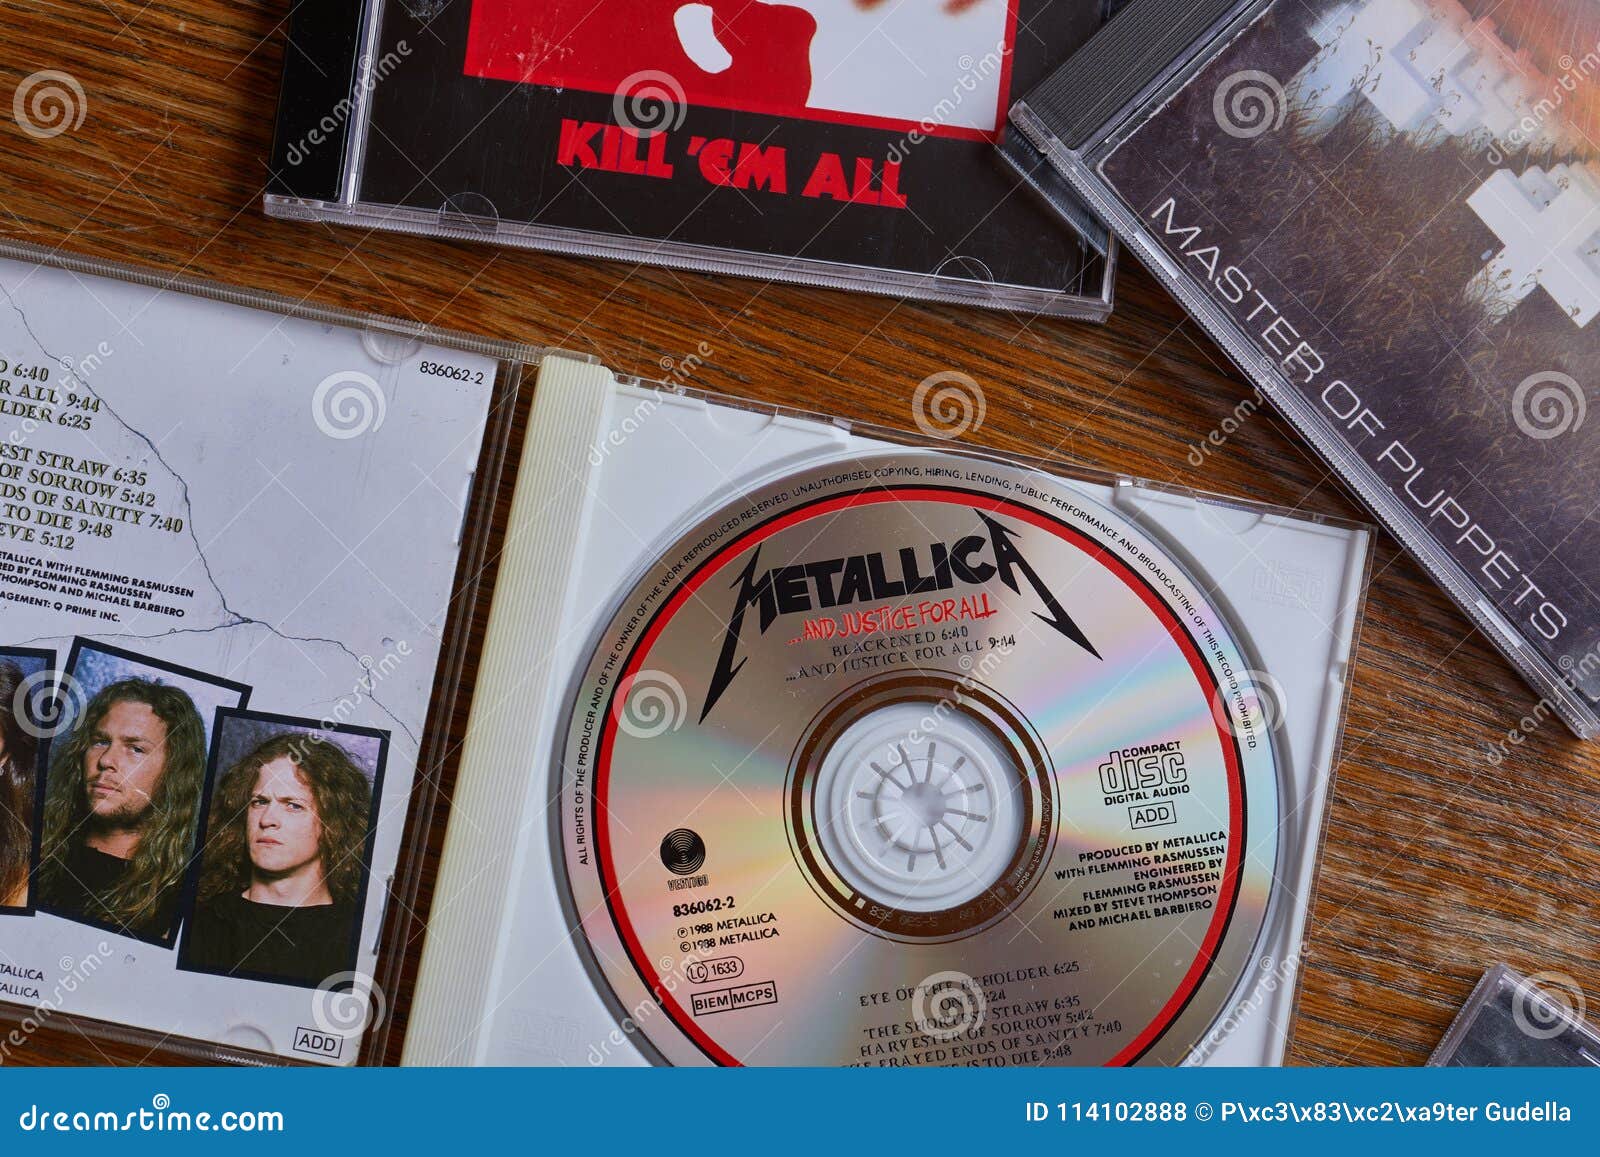 Metallica CD - Live In The 80s (2cd)